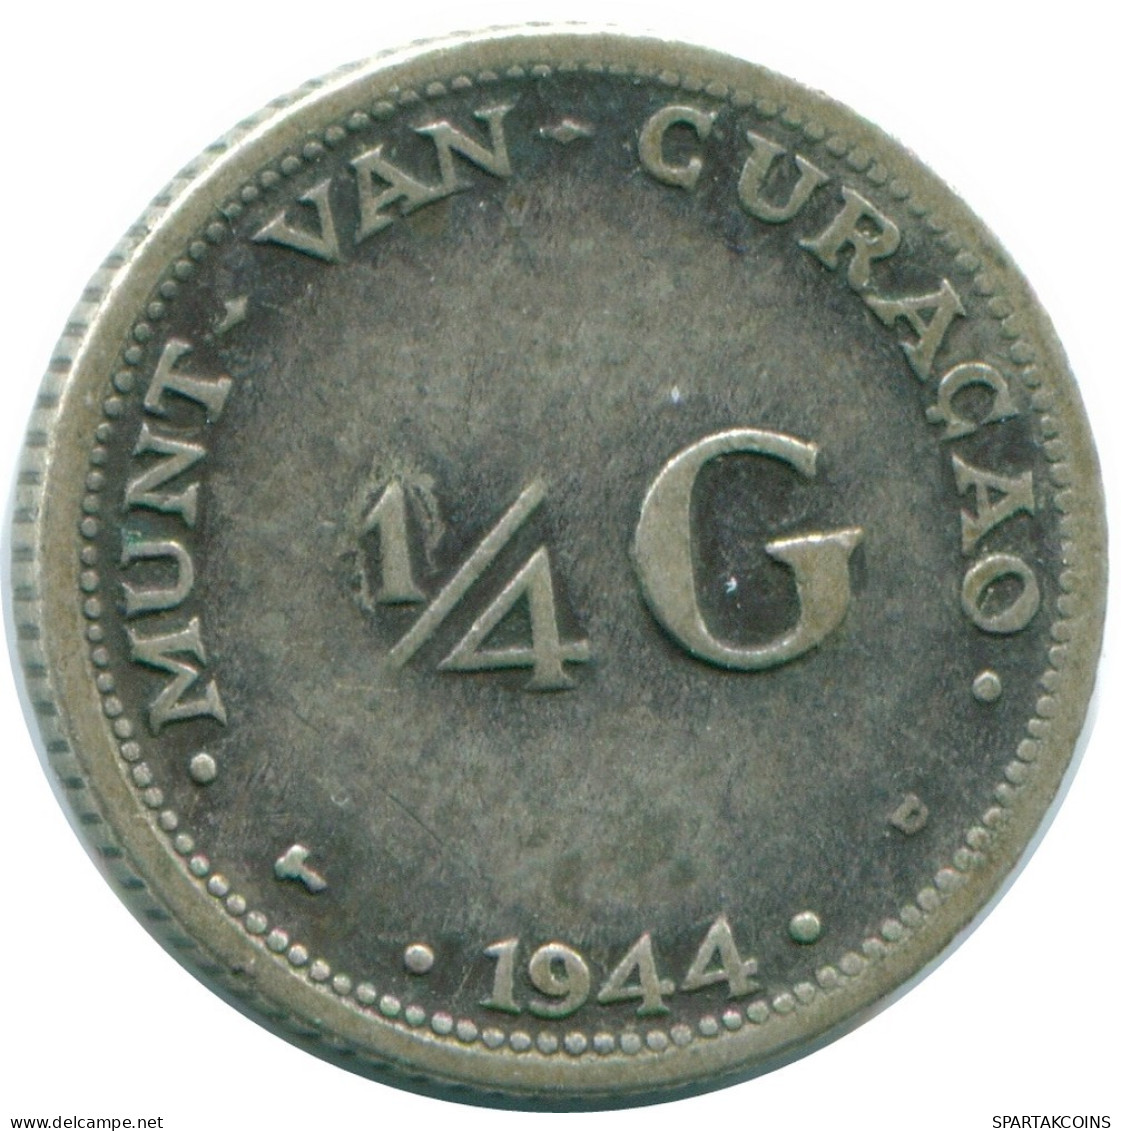 1/4 GULDEN 1944 CURACAO Netherlands SILVER Colonial Coin #NL10618.4.U.A - Curacao